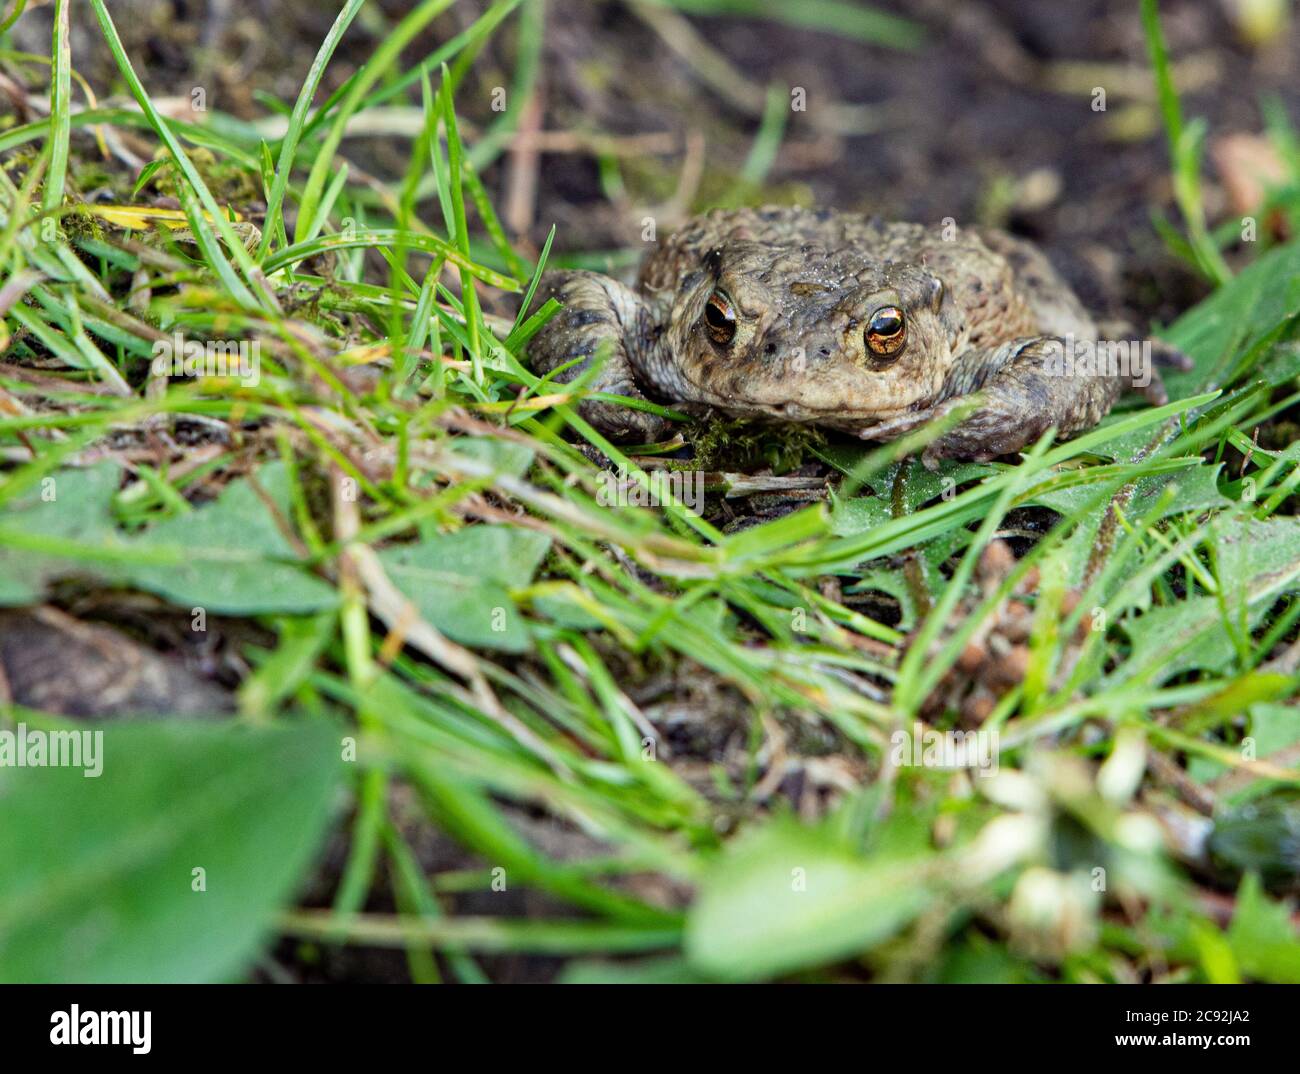 A Toad, Chipping, Preston, Lancashire, UK Stock Photo